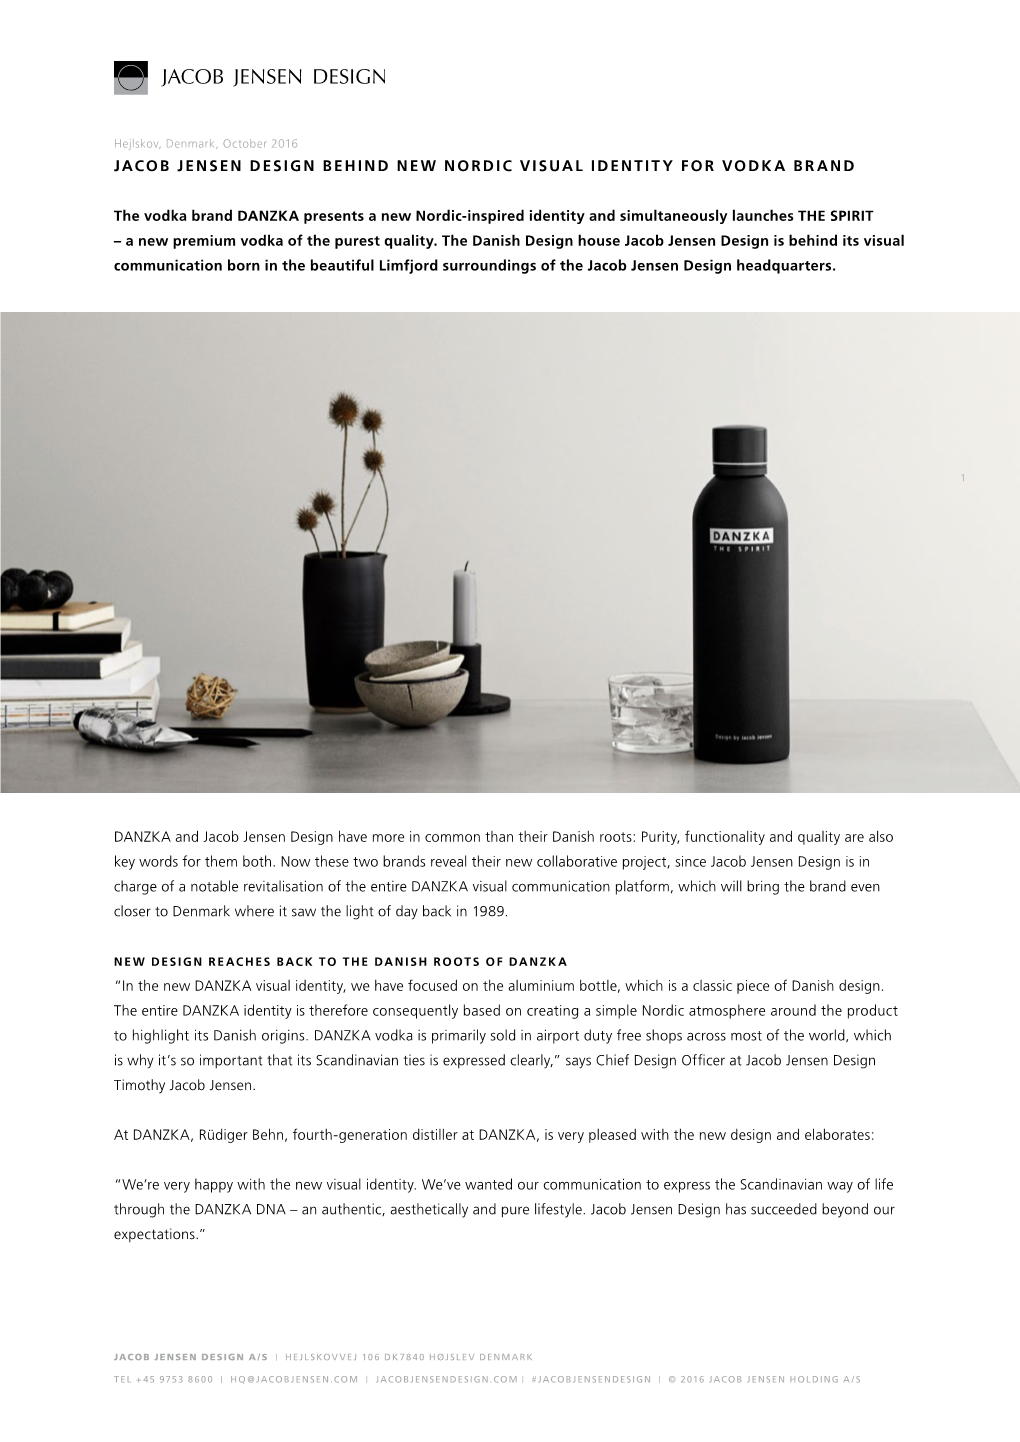 Jacob Jensen Design Behind New Nordic Visual Identity for Vodka Brand